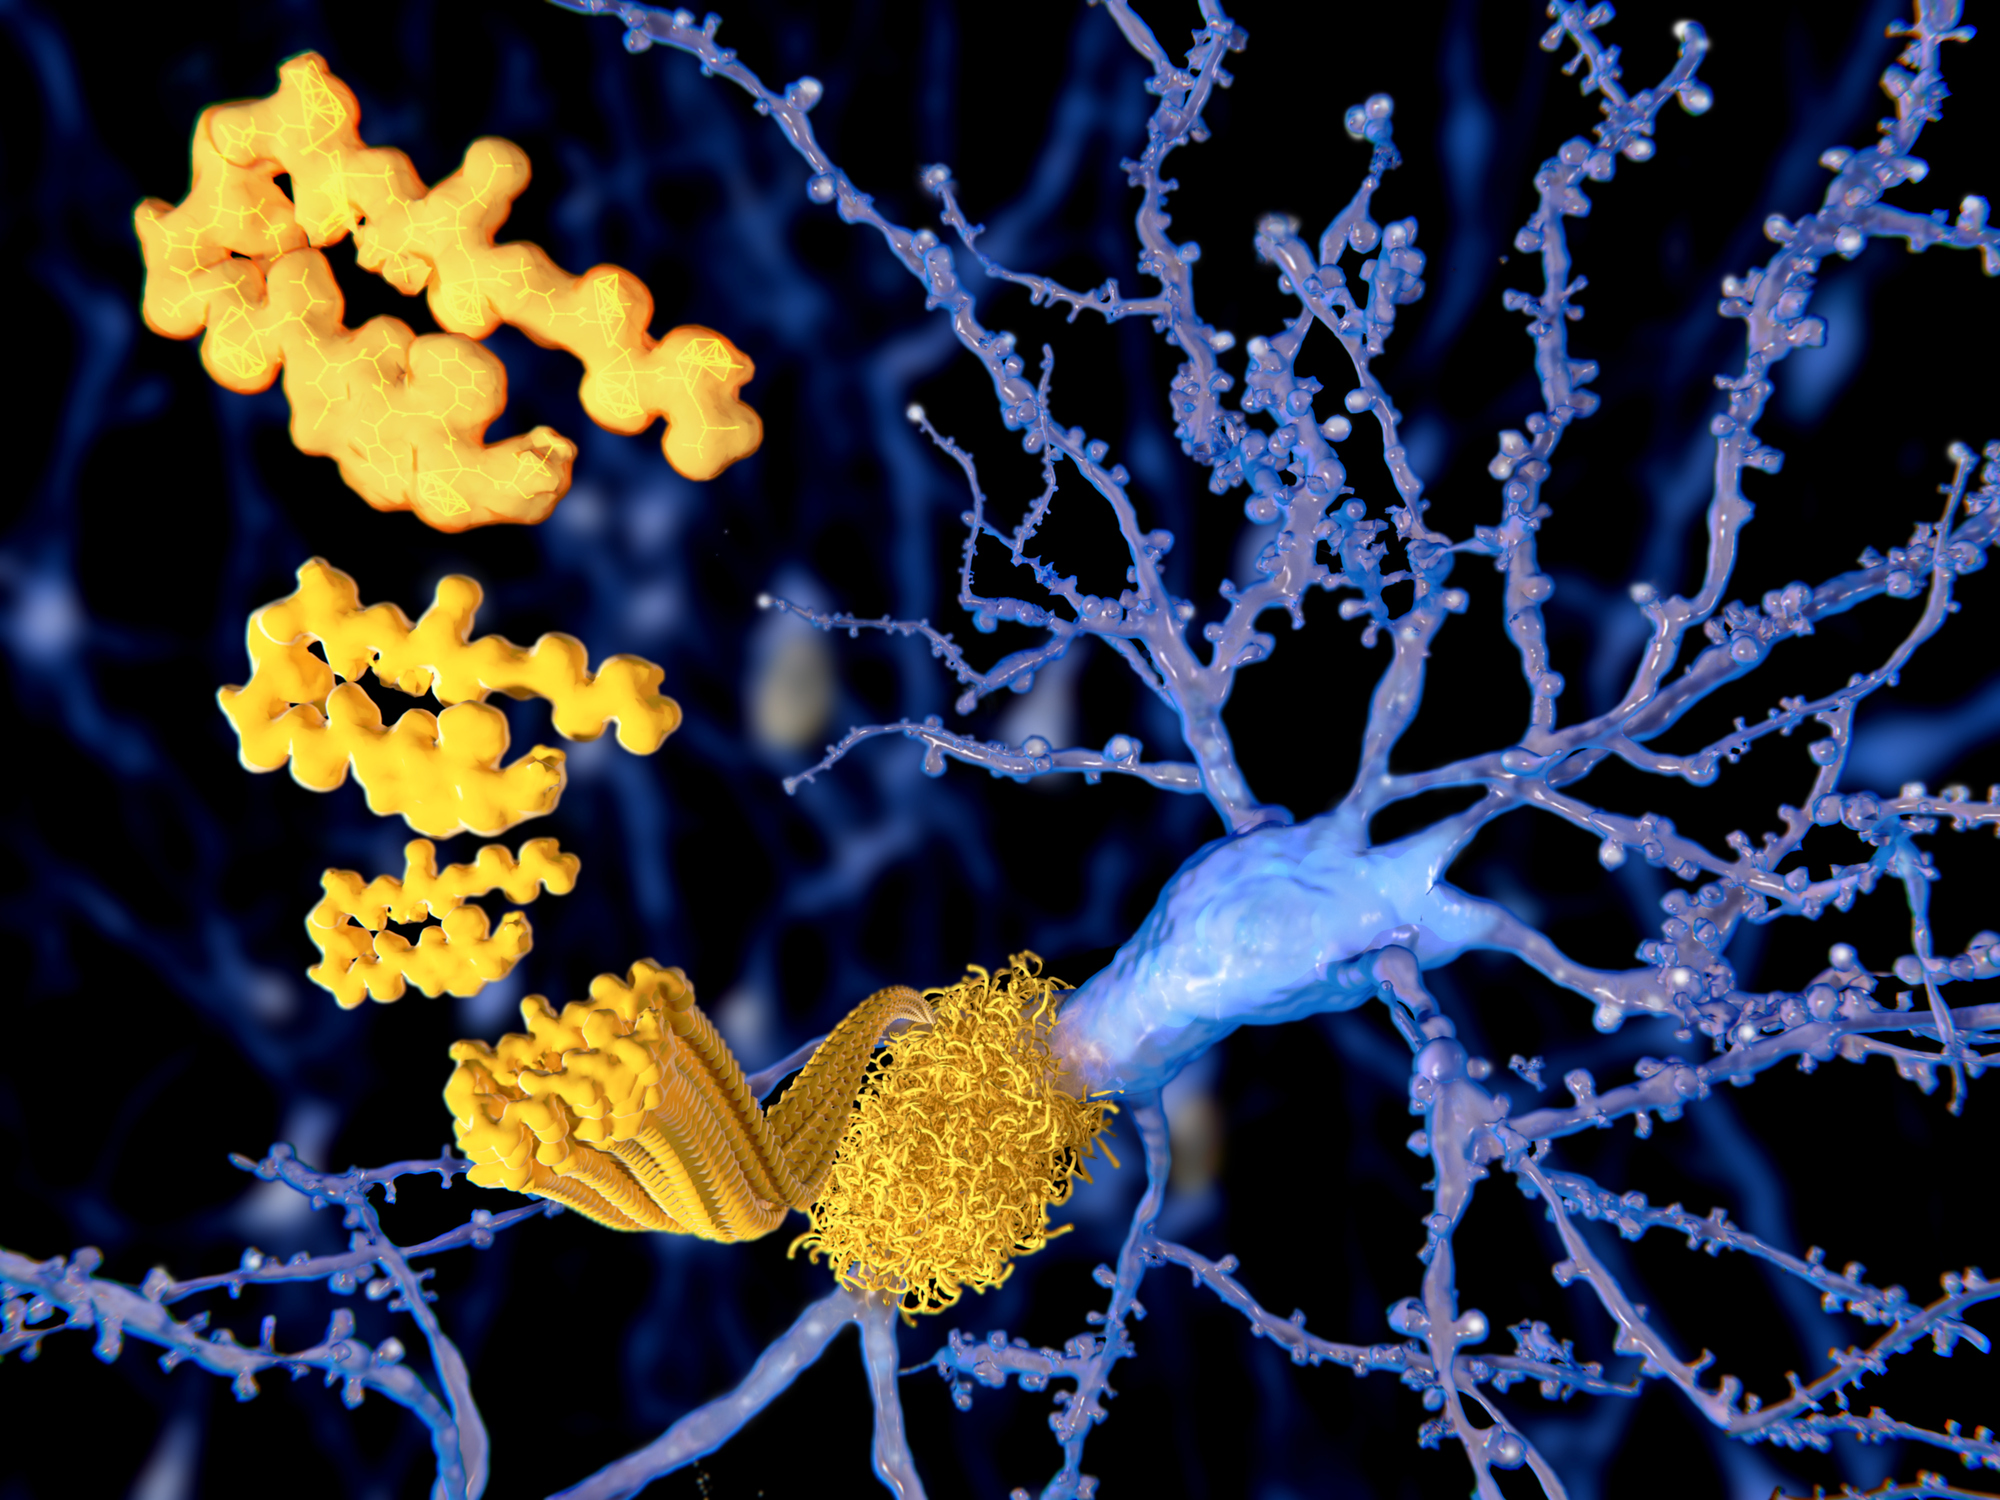 Alzheimers-neurons-plaques-tangles.jpg 2000 x 1500